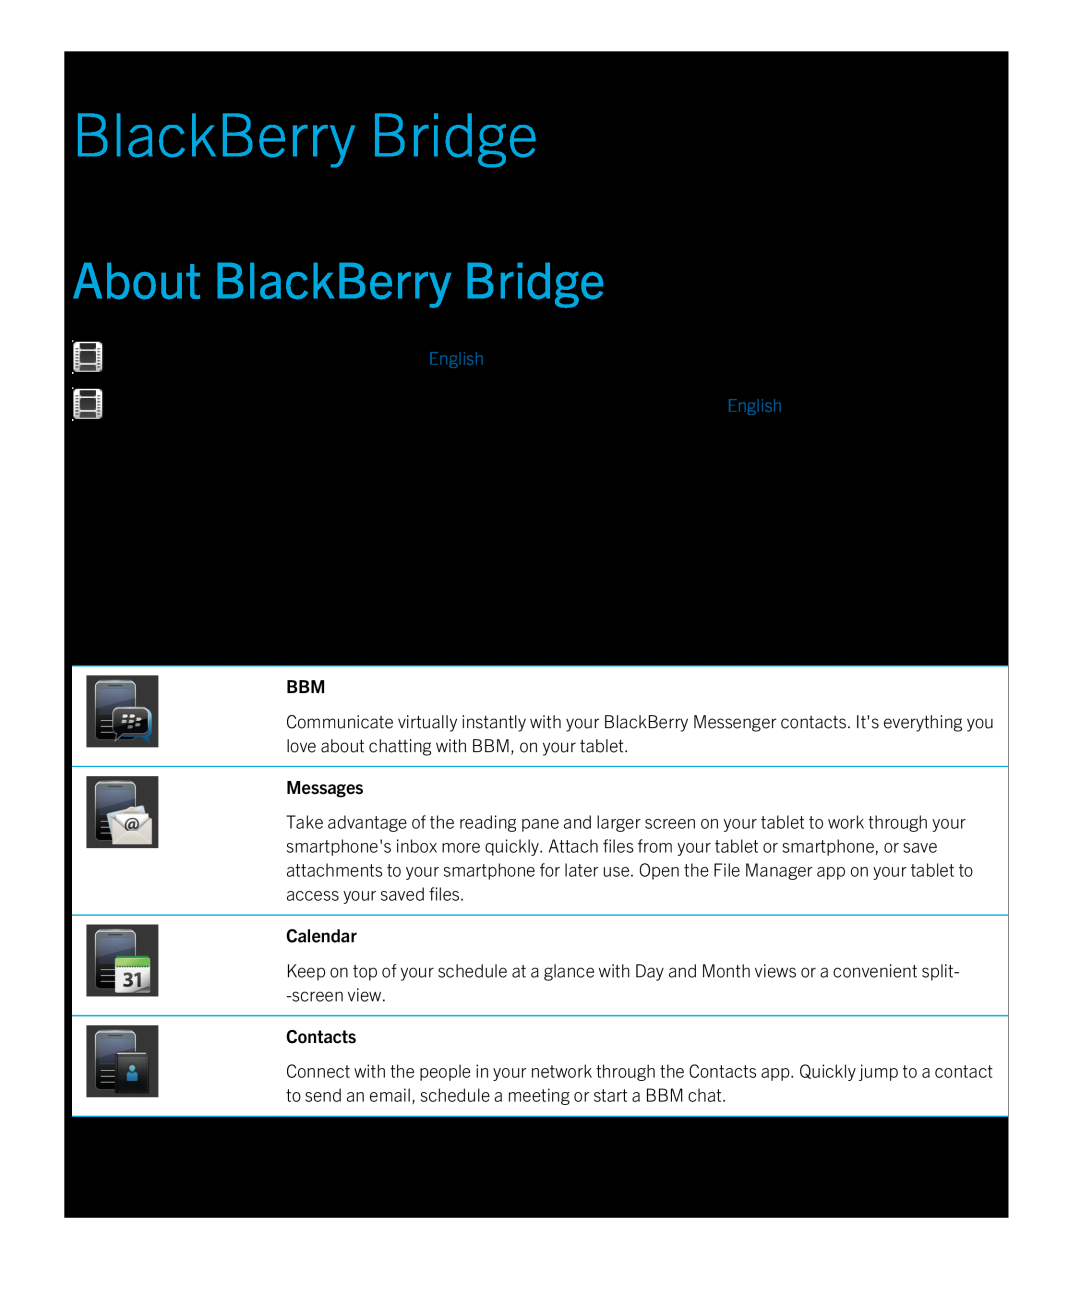 Blackberry 2.0.1 manual About BlackBerry Bridge, Messages, Calendar, Contacts 